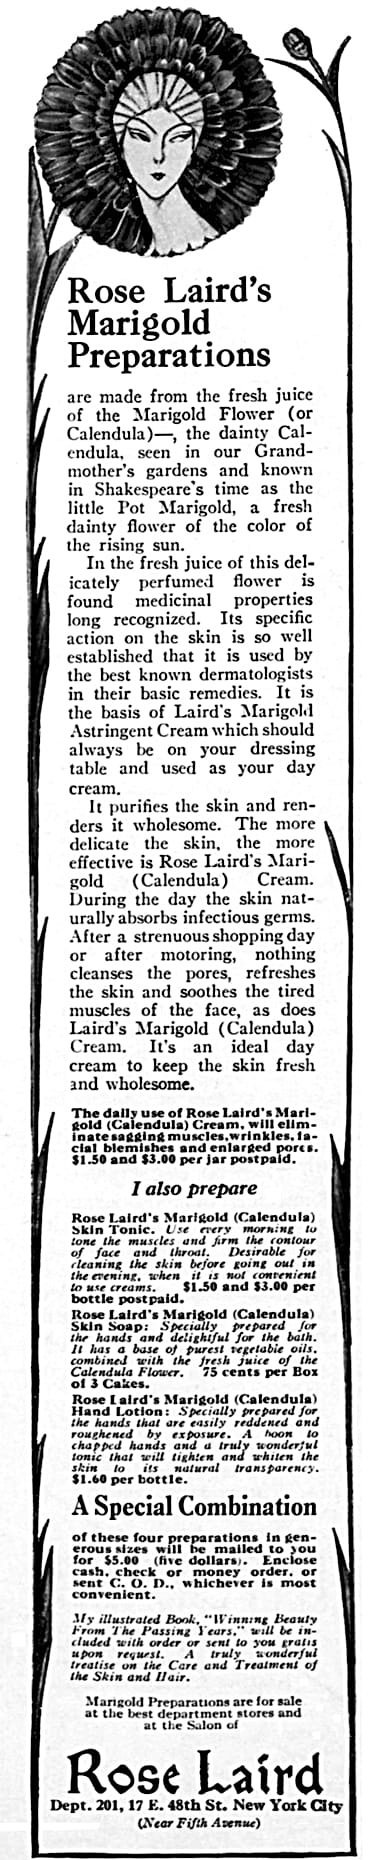 1927 Rose Laird Marigold Preparations